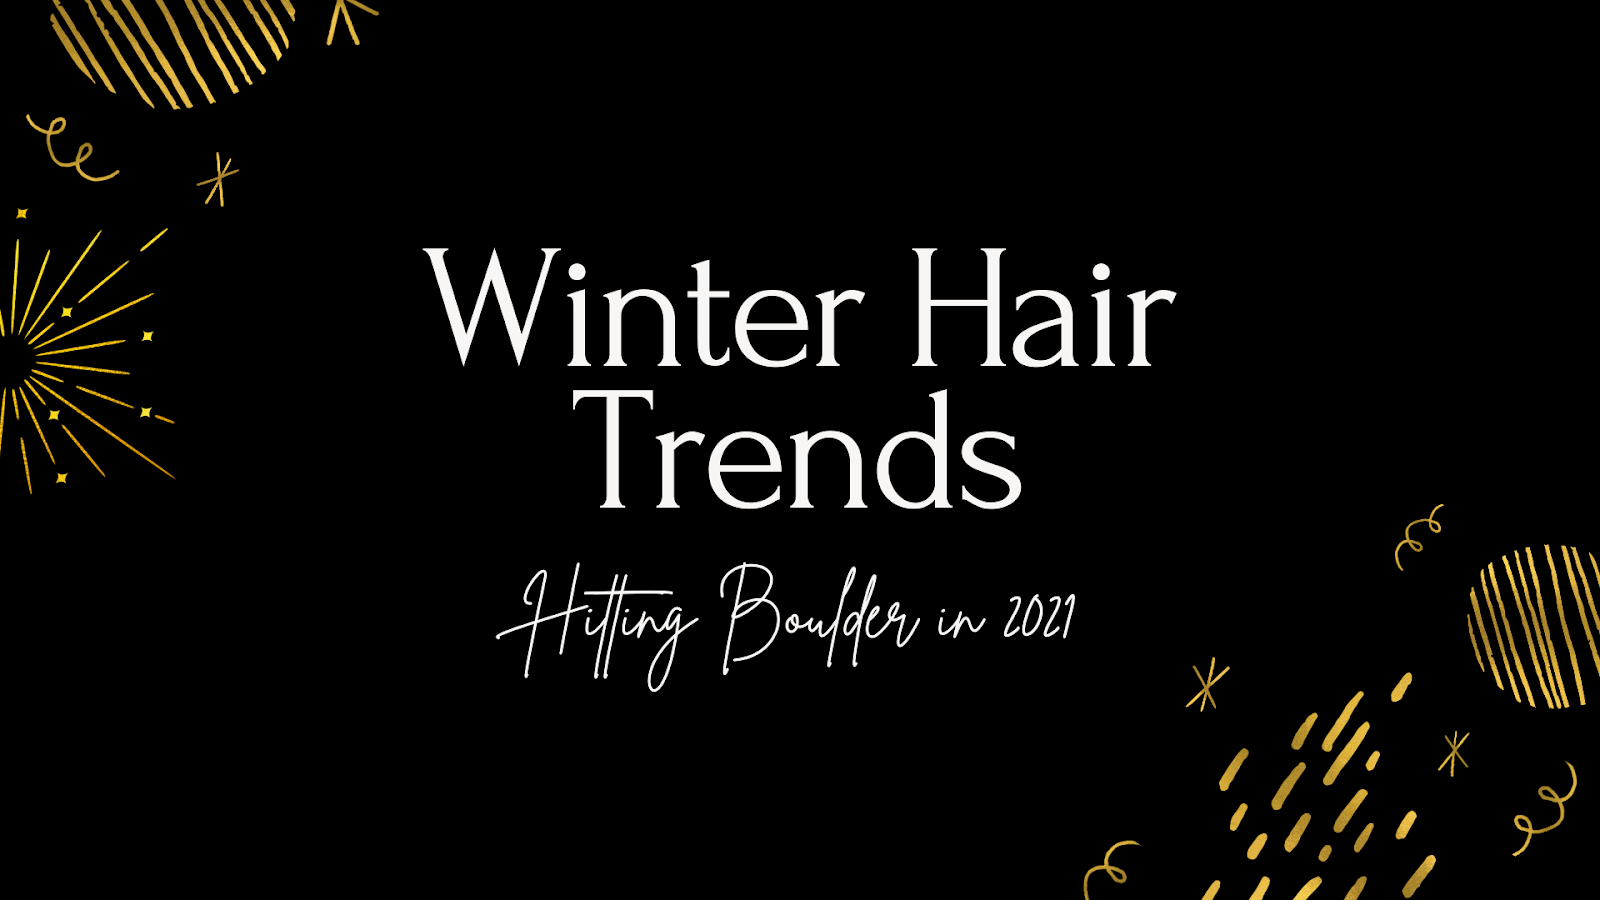 Winter Trends - Hitting Boulder in 2021